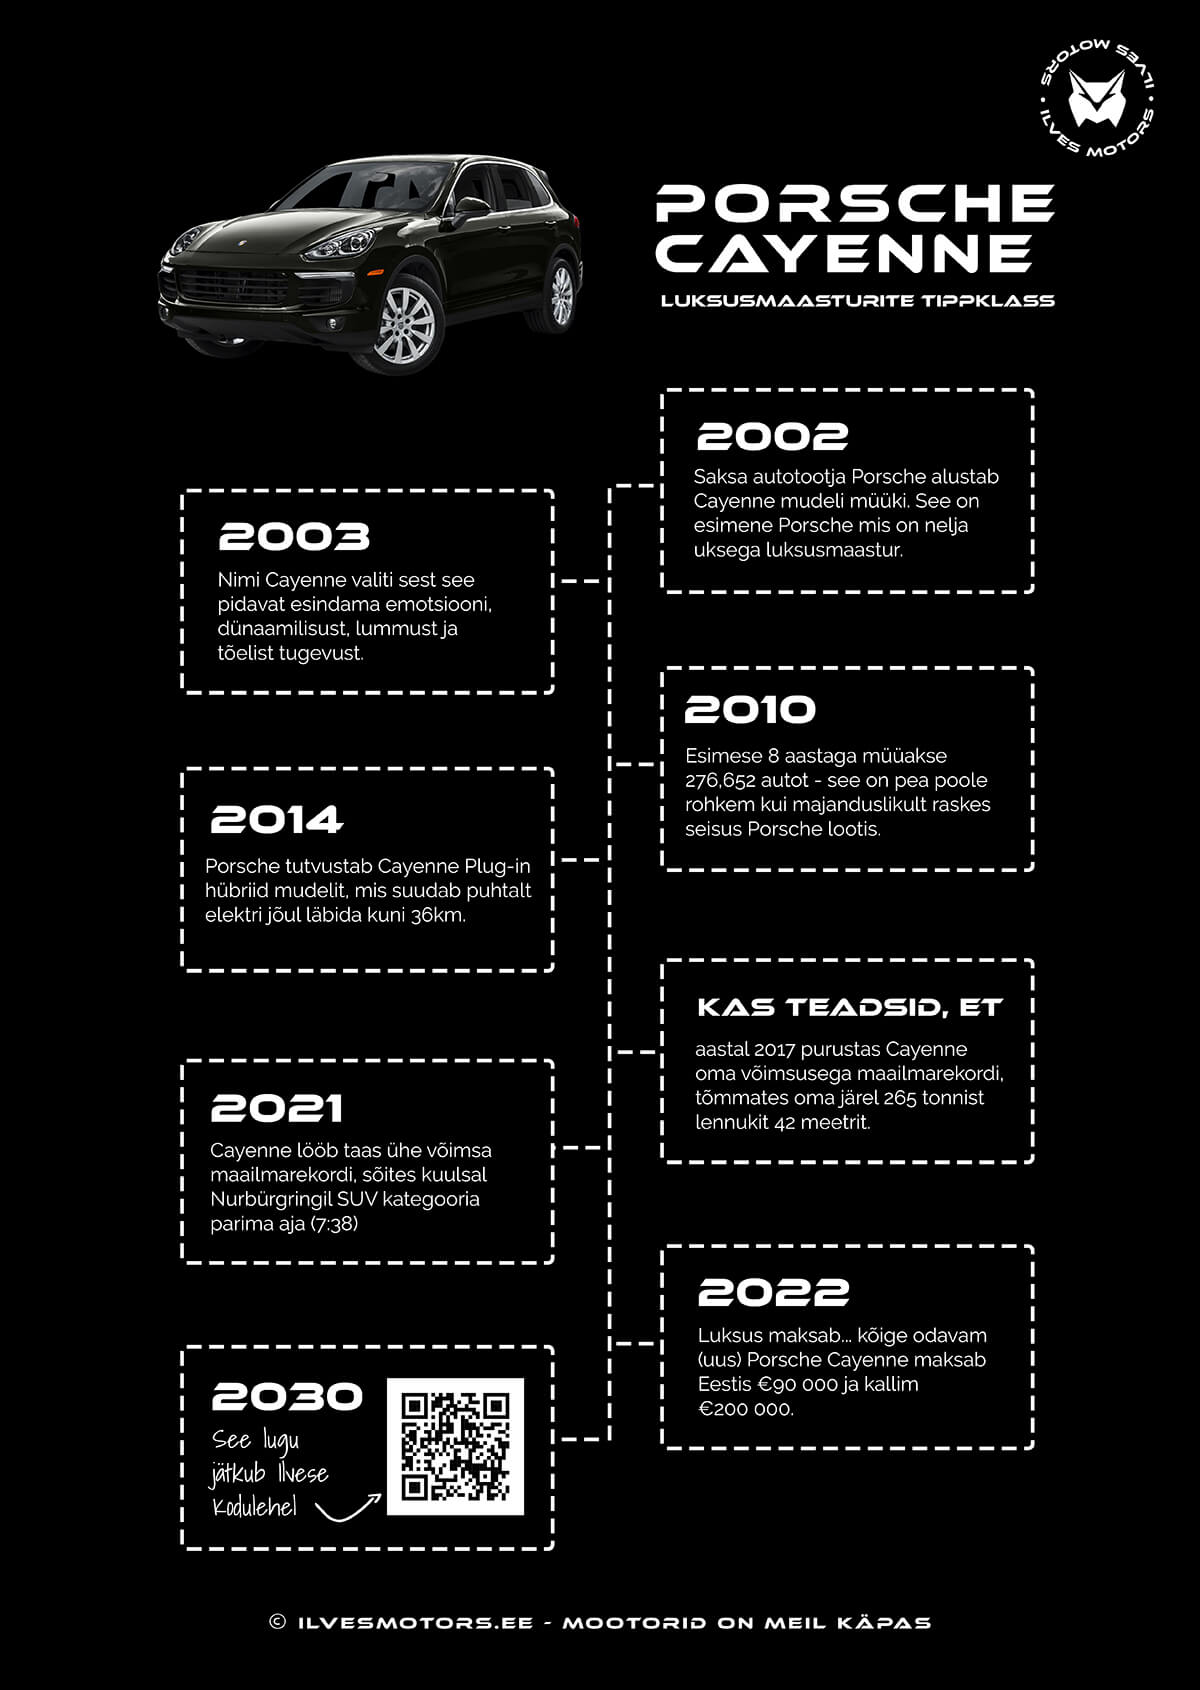 Porsche Cayenne ajalugu ja huvitavad faktid